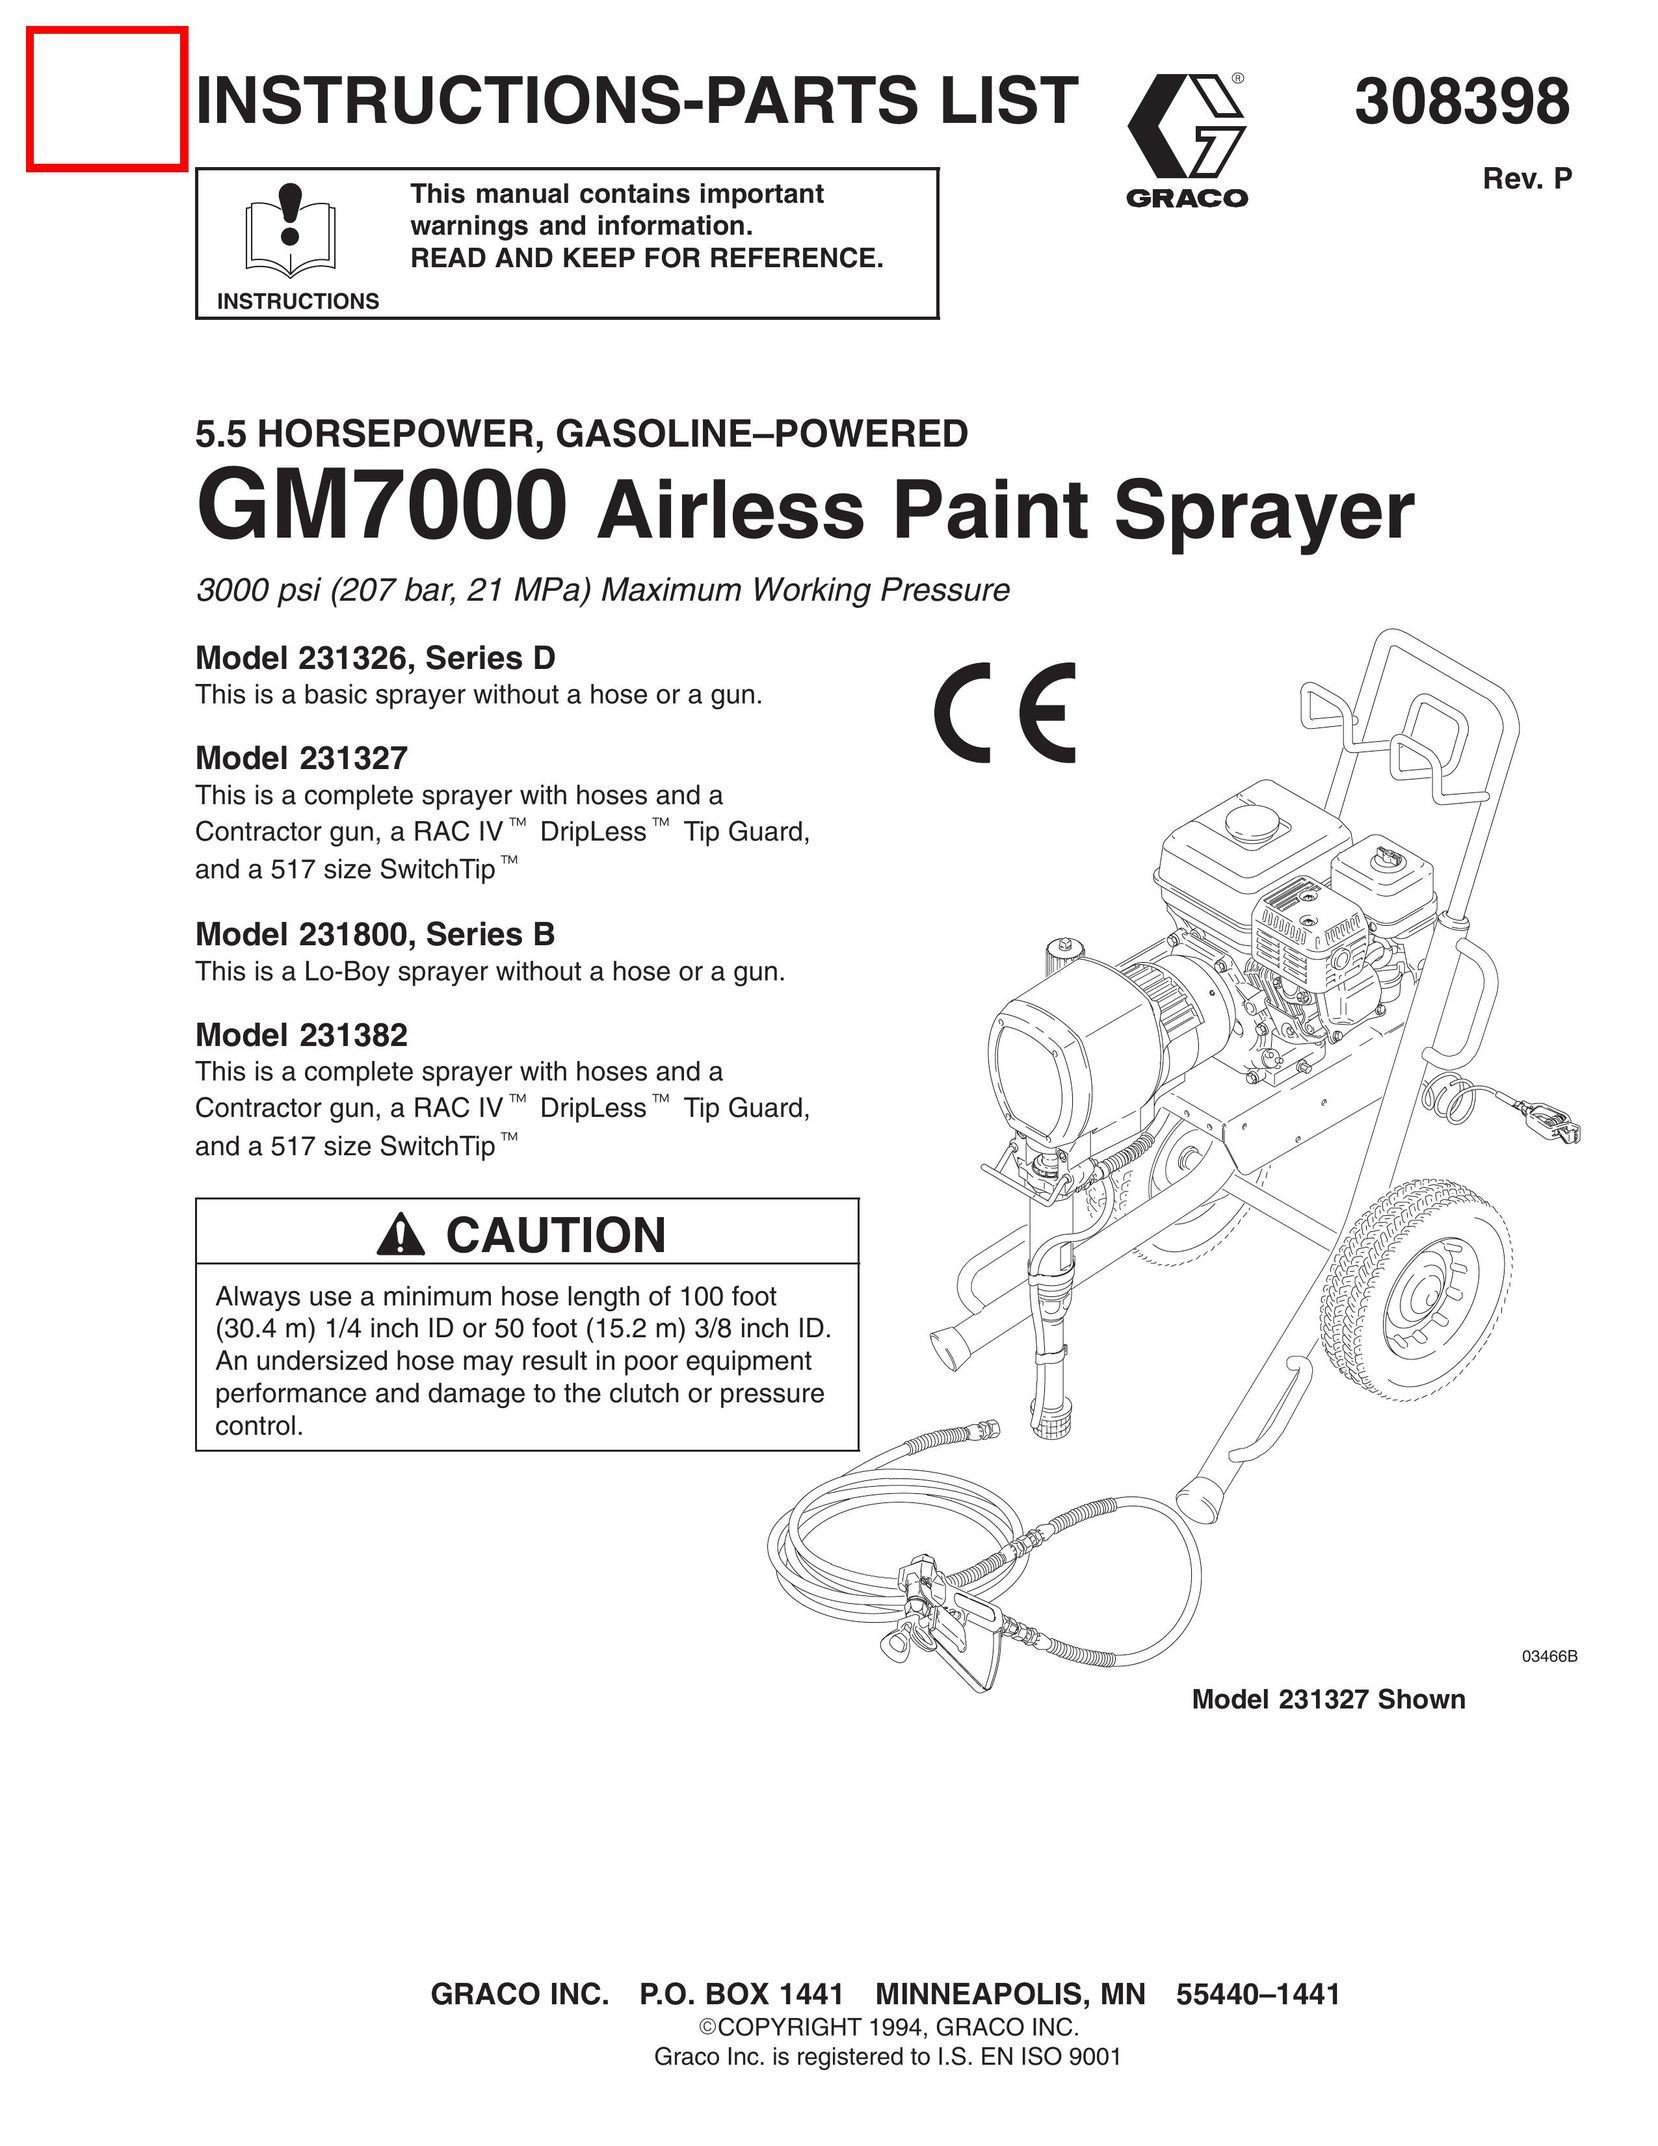 Hitachi 231327 Paint Sprayer User Manual